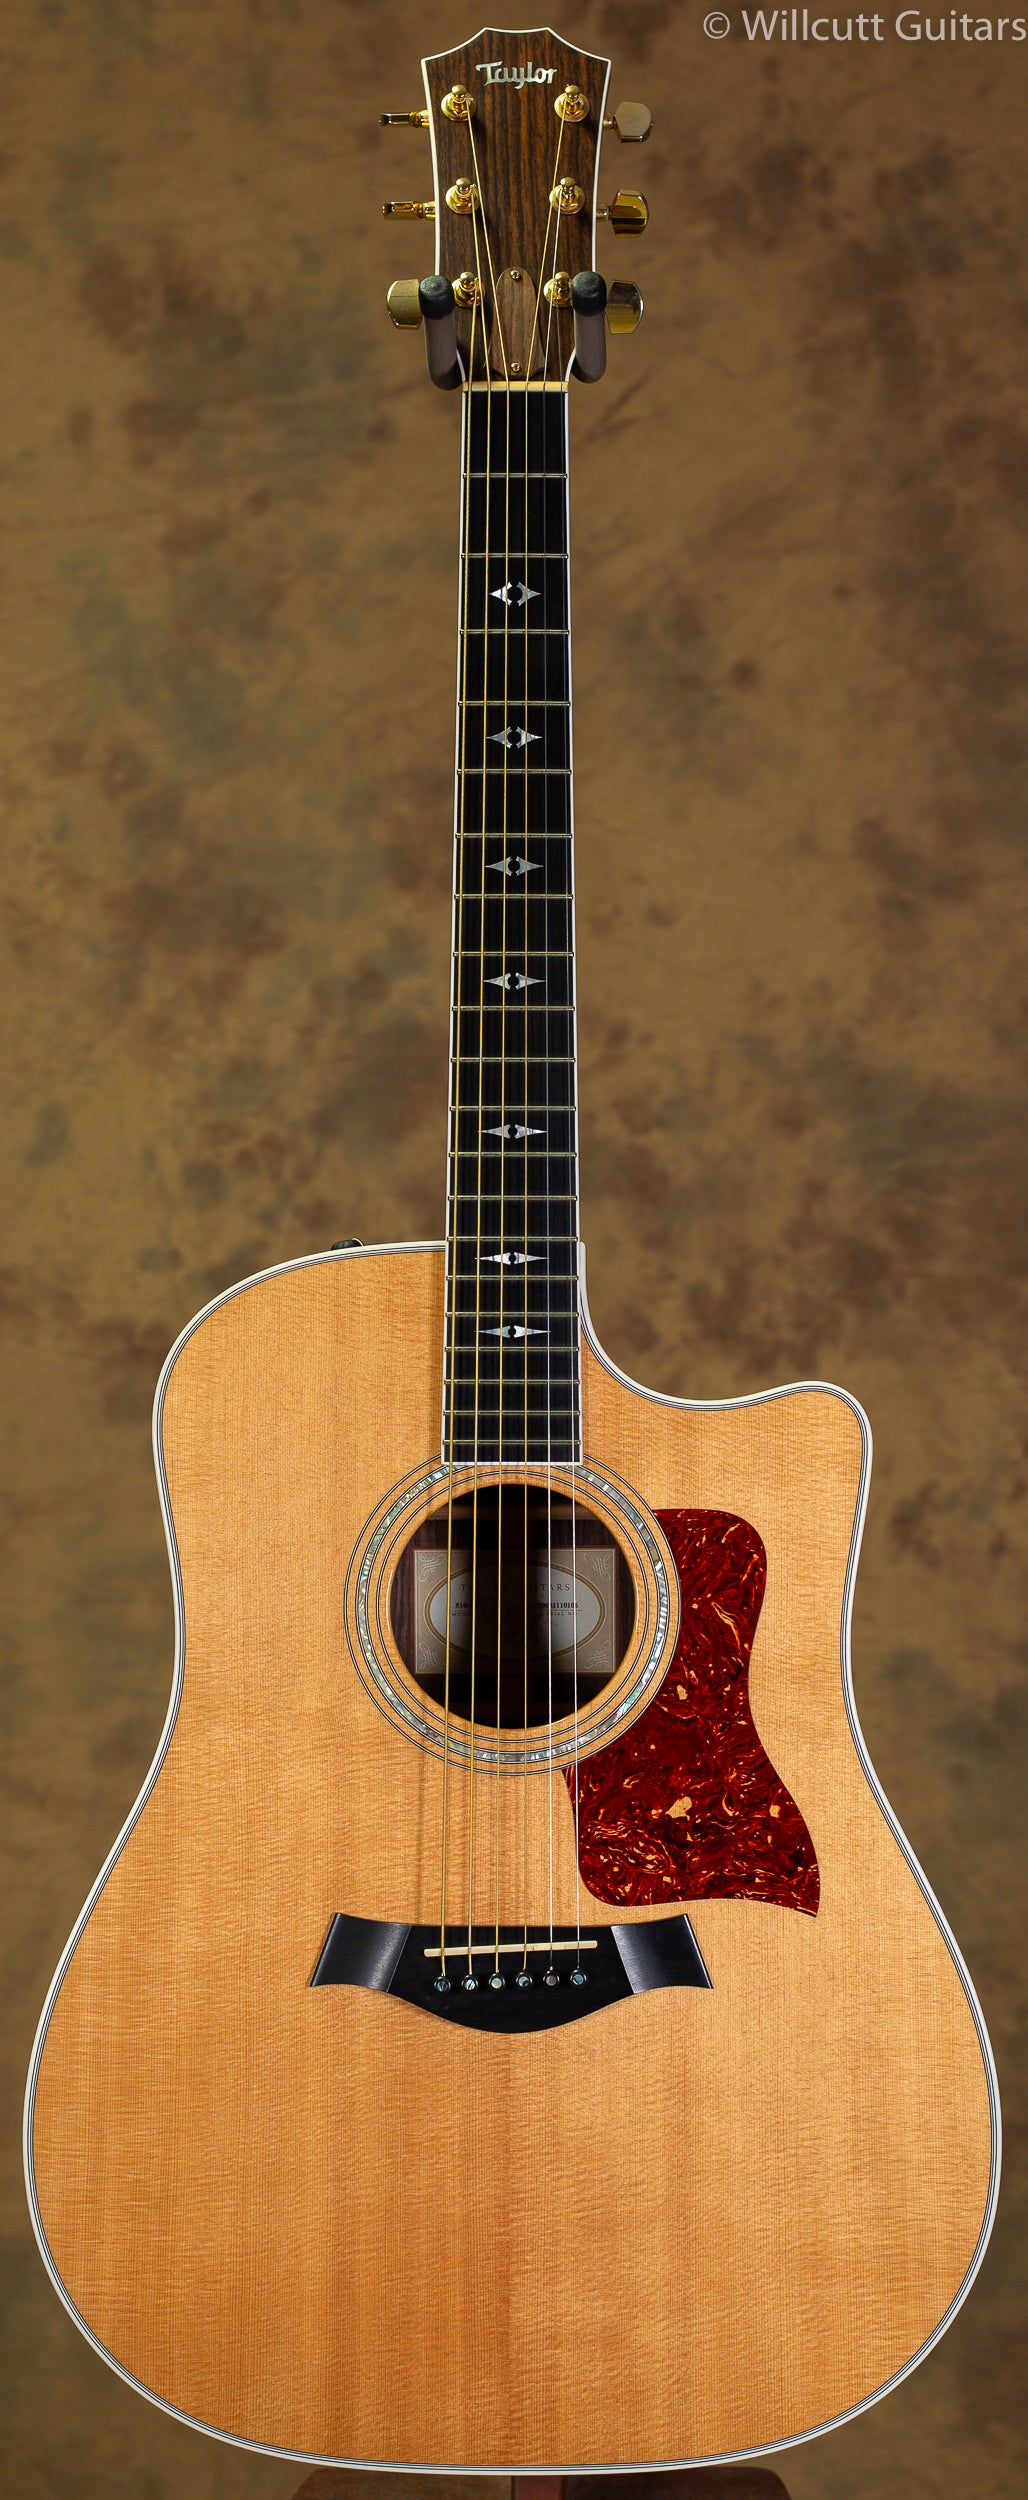 Taylor 810ce USED - Willcutt Guitars